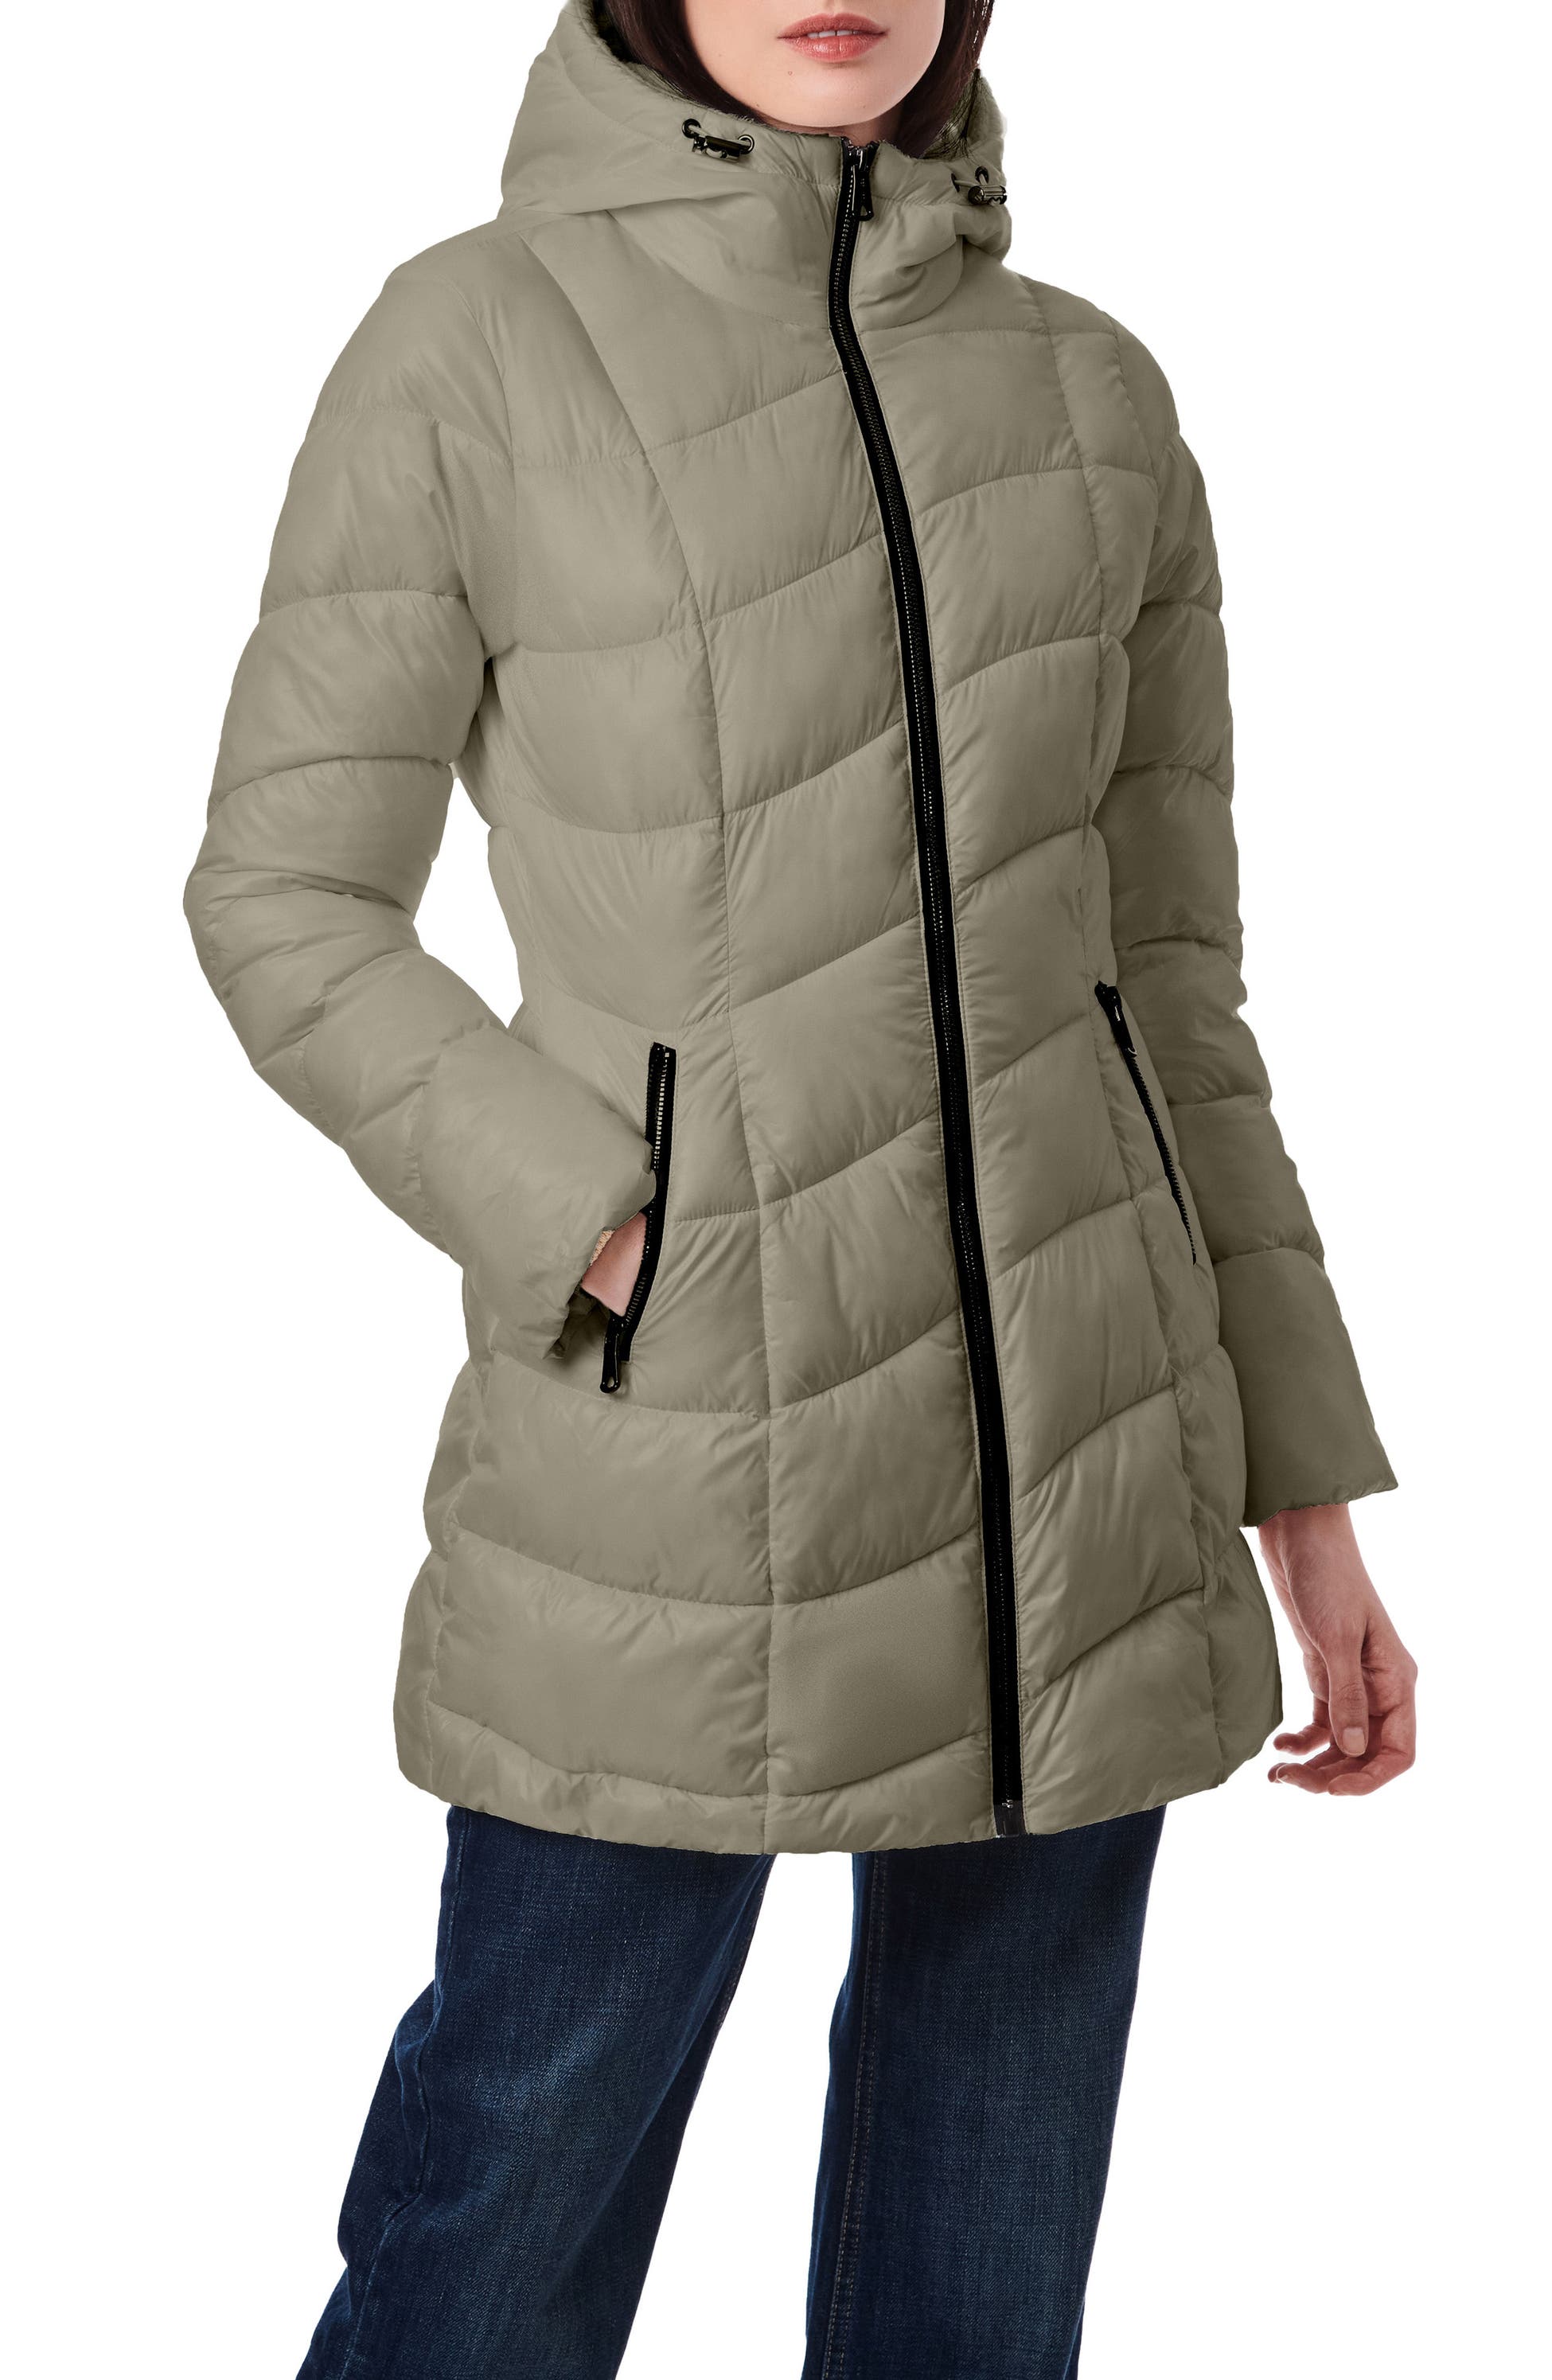 Bernardo Women's Wave Quilt Long Nylon Puffer Jacket (Liquid Metal, Size XS Only) $53.97 + Free Shipping